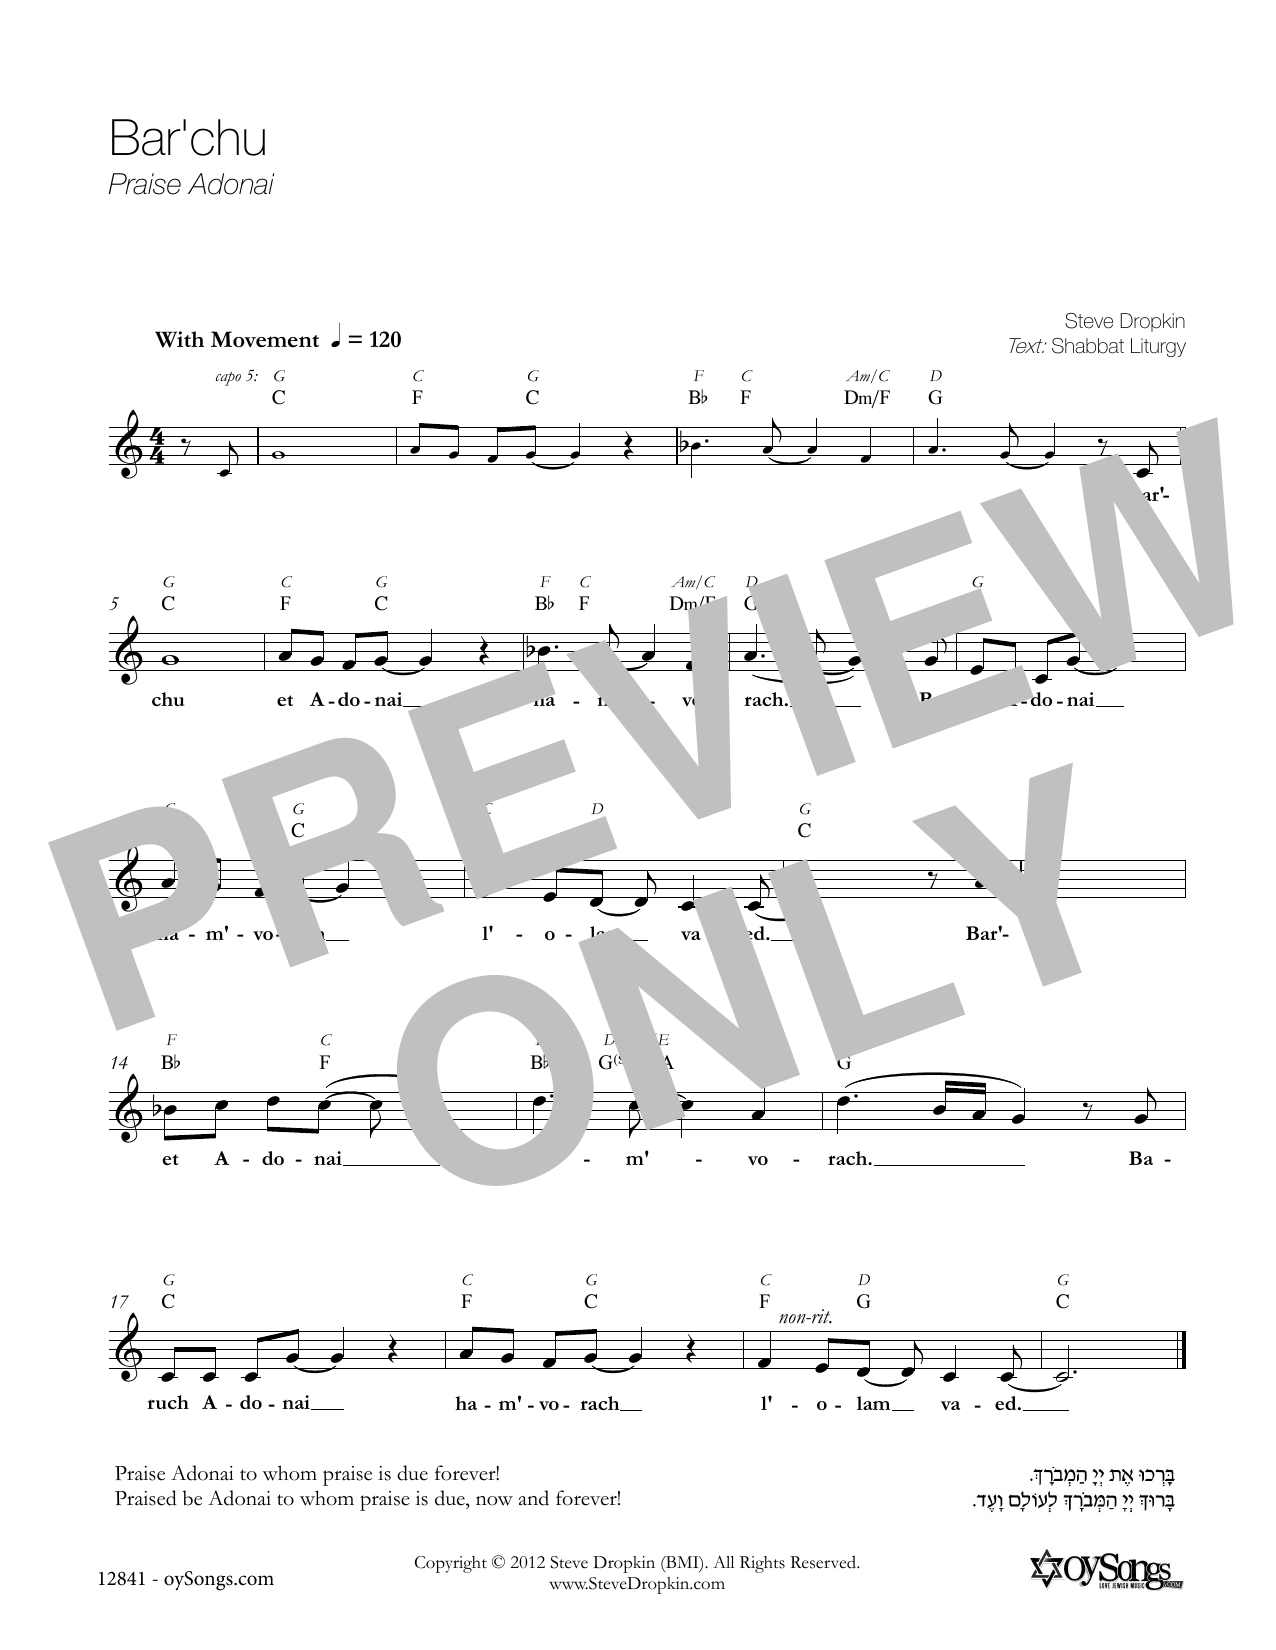 Steve Dropkin Bar'chu Sheet Music Notes & Chords for Piano, Vocal & Guitar (Right-Hand Melody) - Download or Print PDF